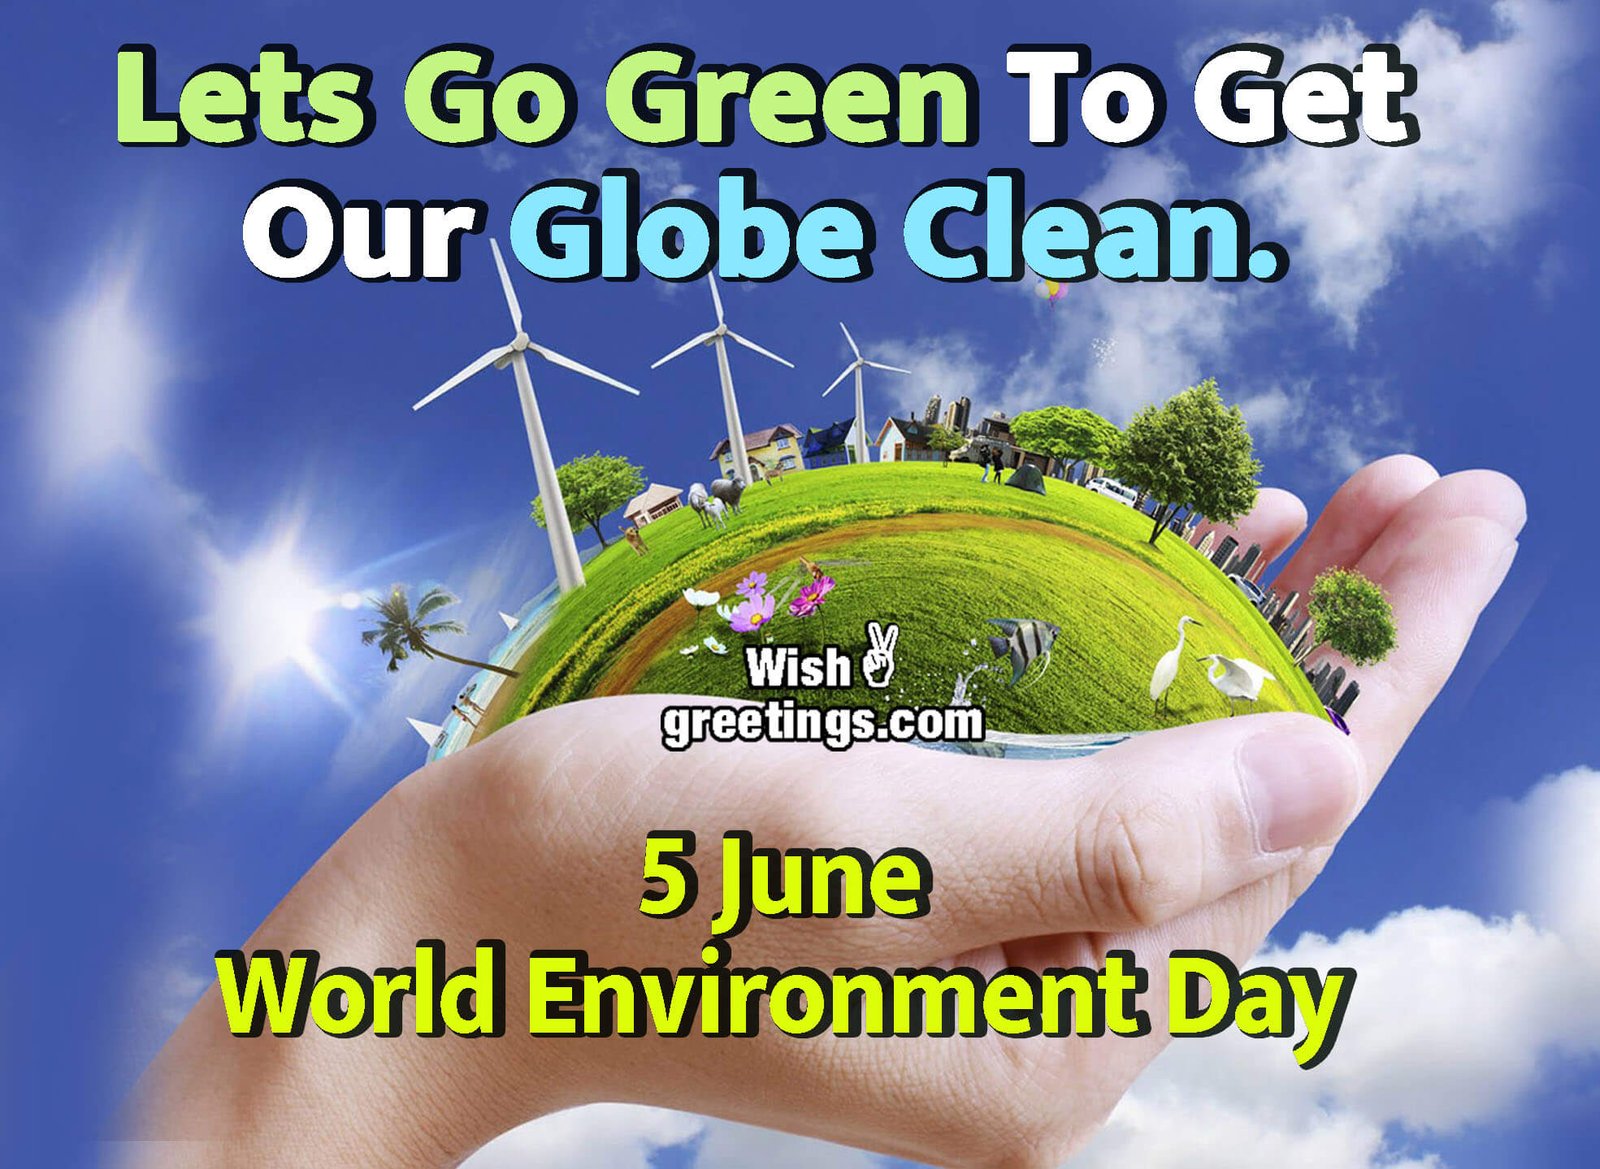 5 June World Environment Day Slogan Image